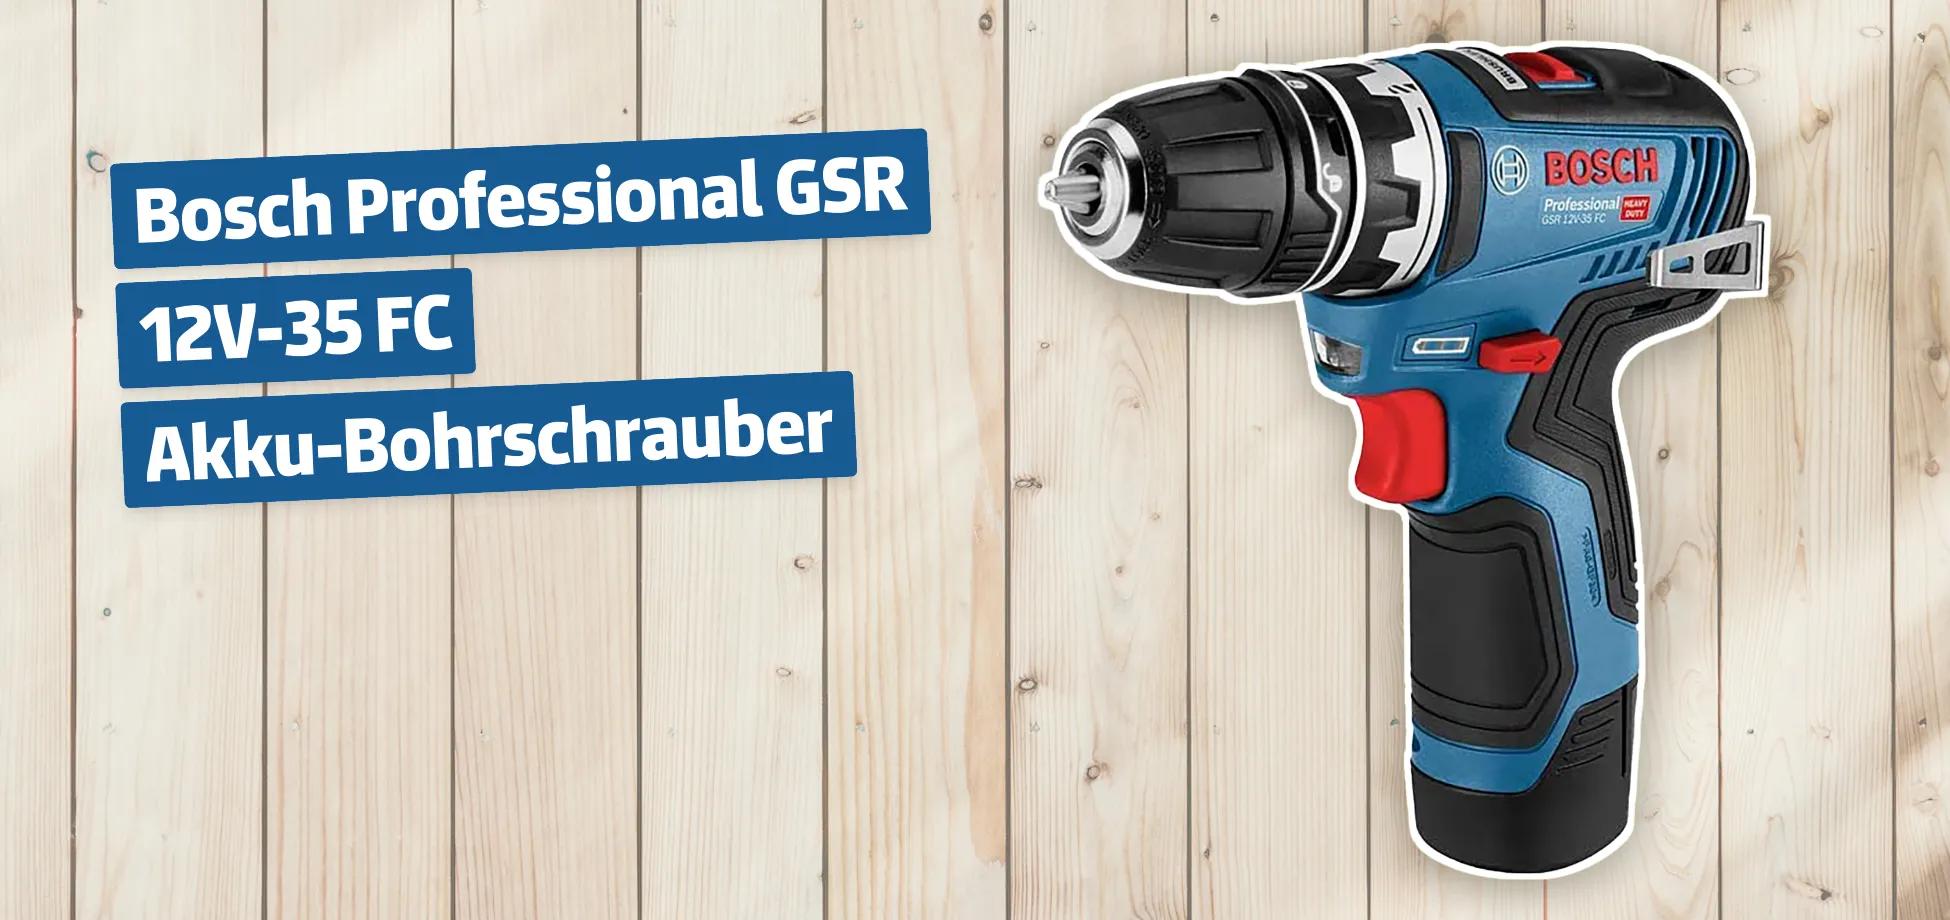 Bosch Professional GSR 12V-35 FC Akku-Bohrschrauber